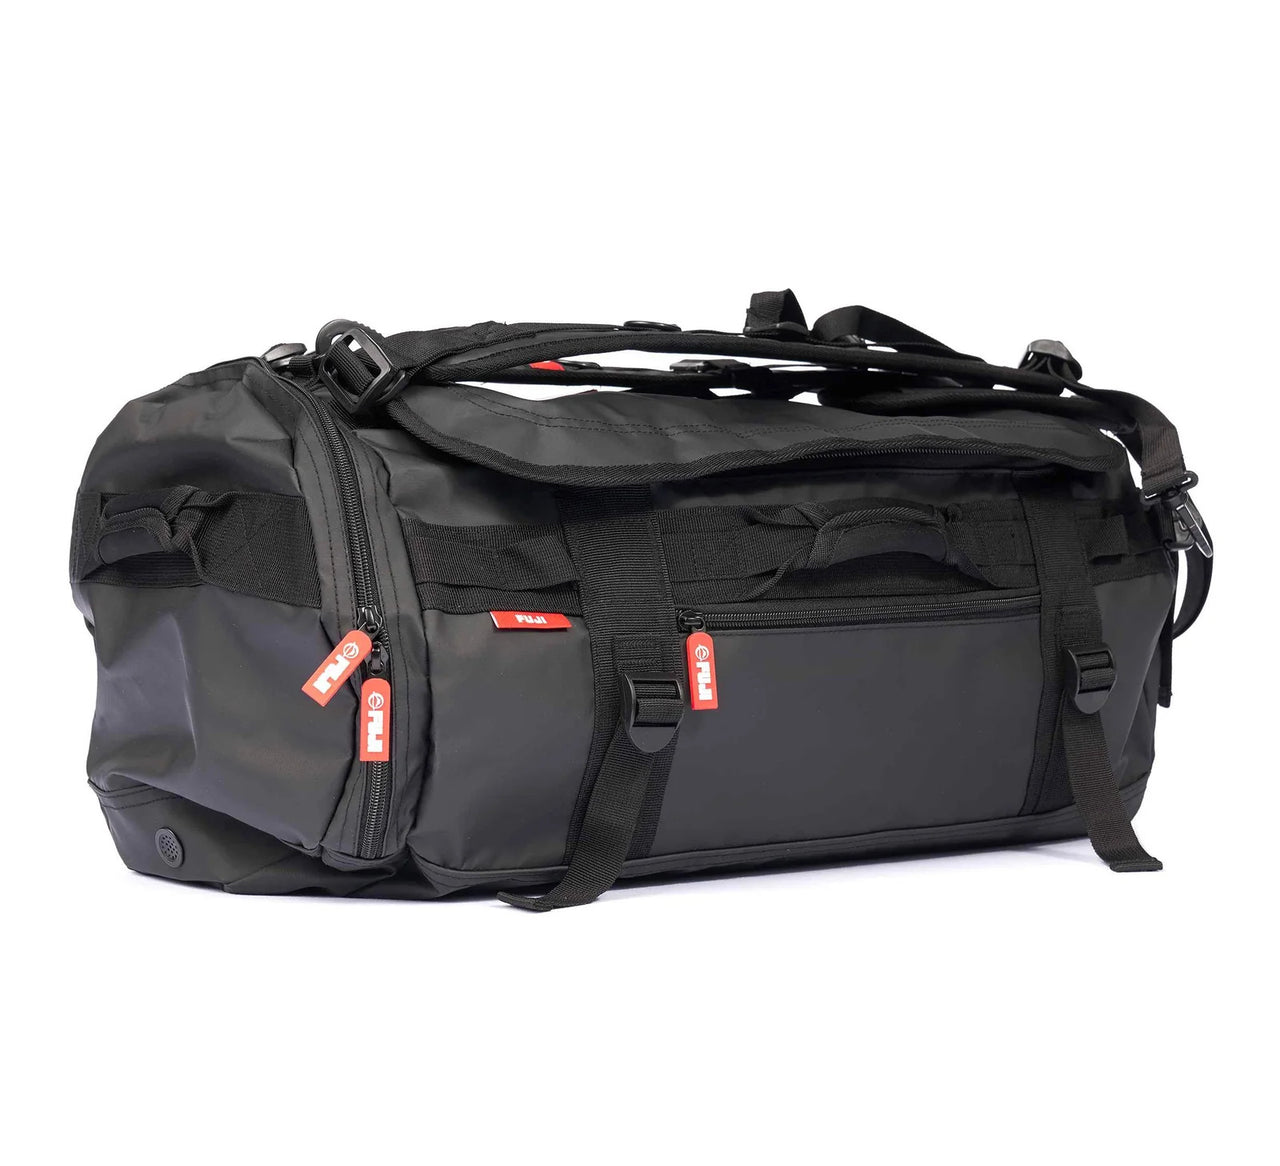 Fuji Comp Convertible Backpack Duffle - Black